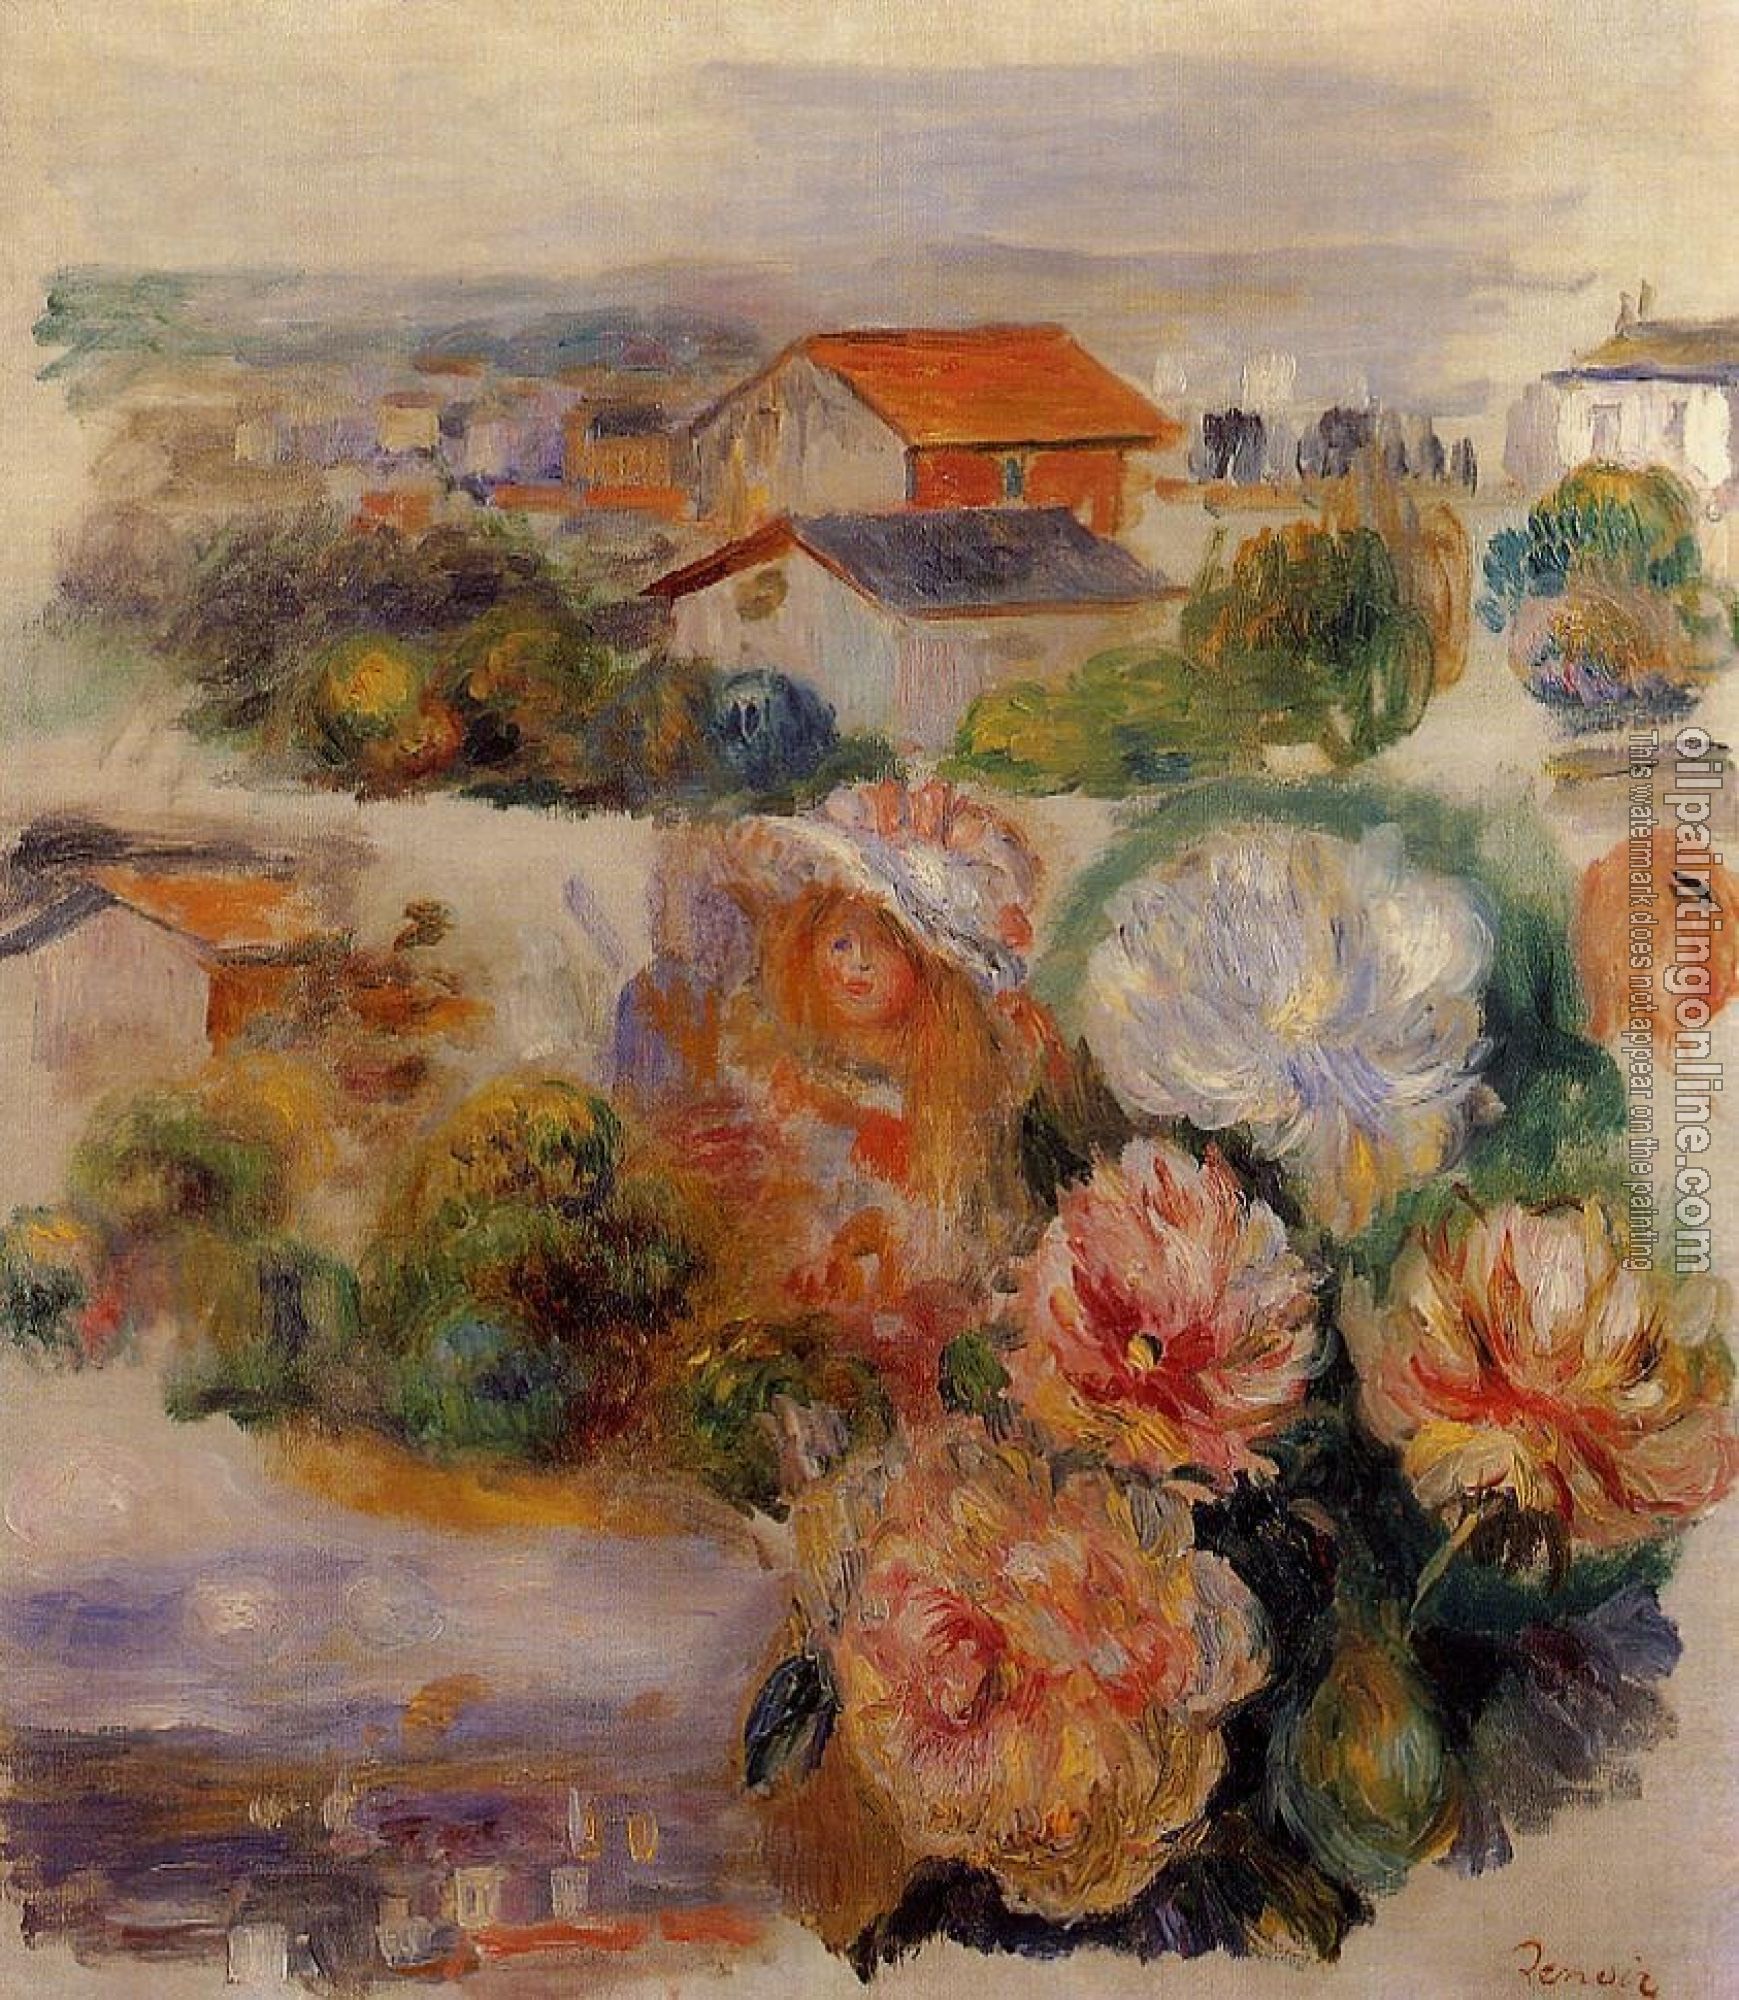 Renoir, Pierre Auguste - Landscape, Flowers and Little Girl